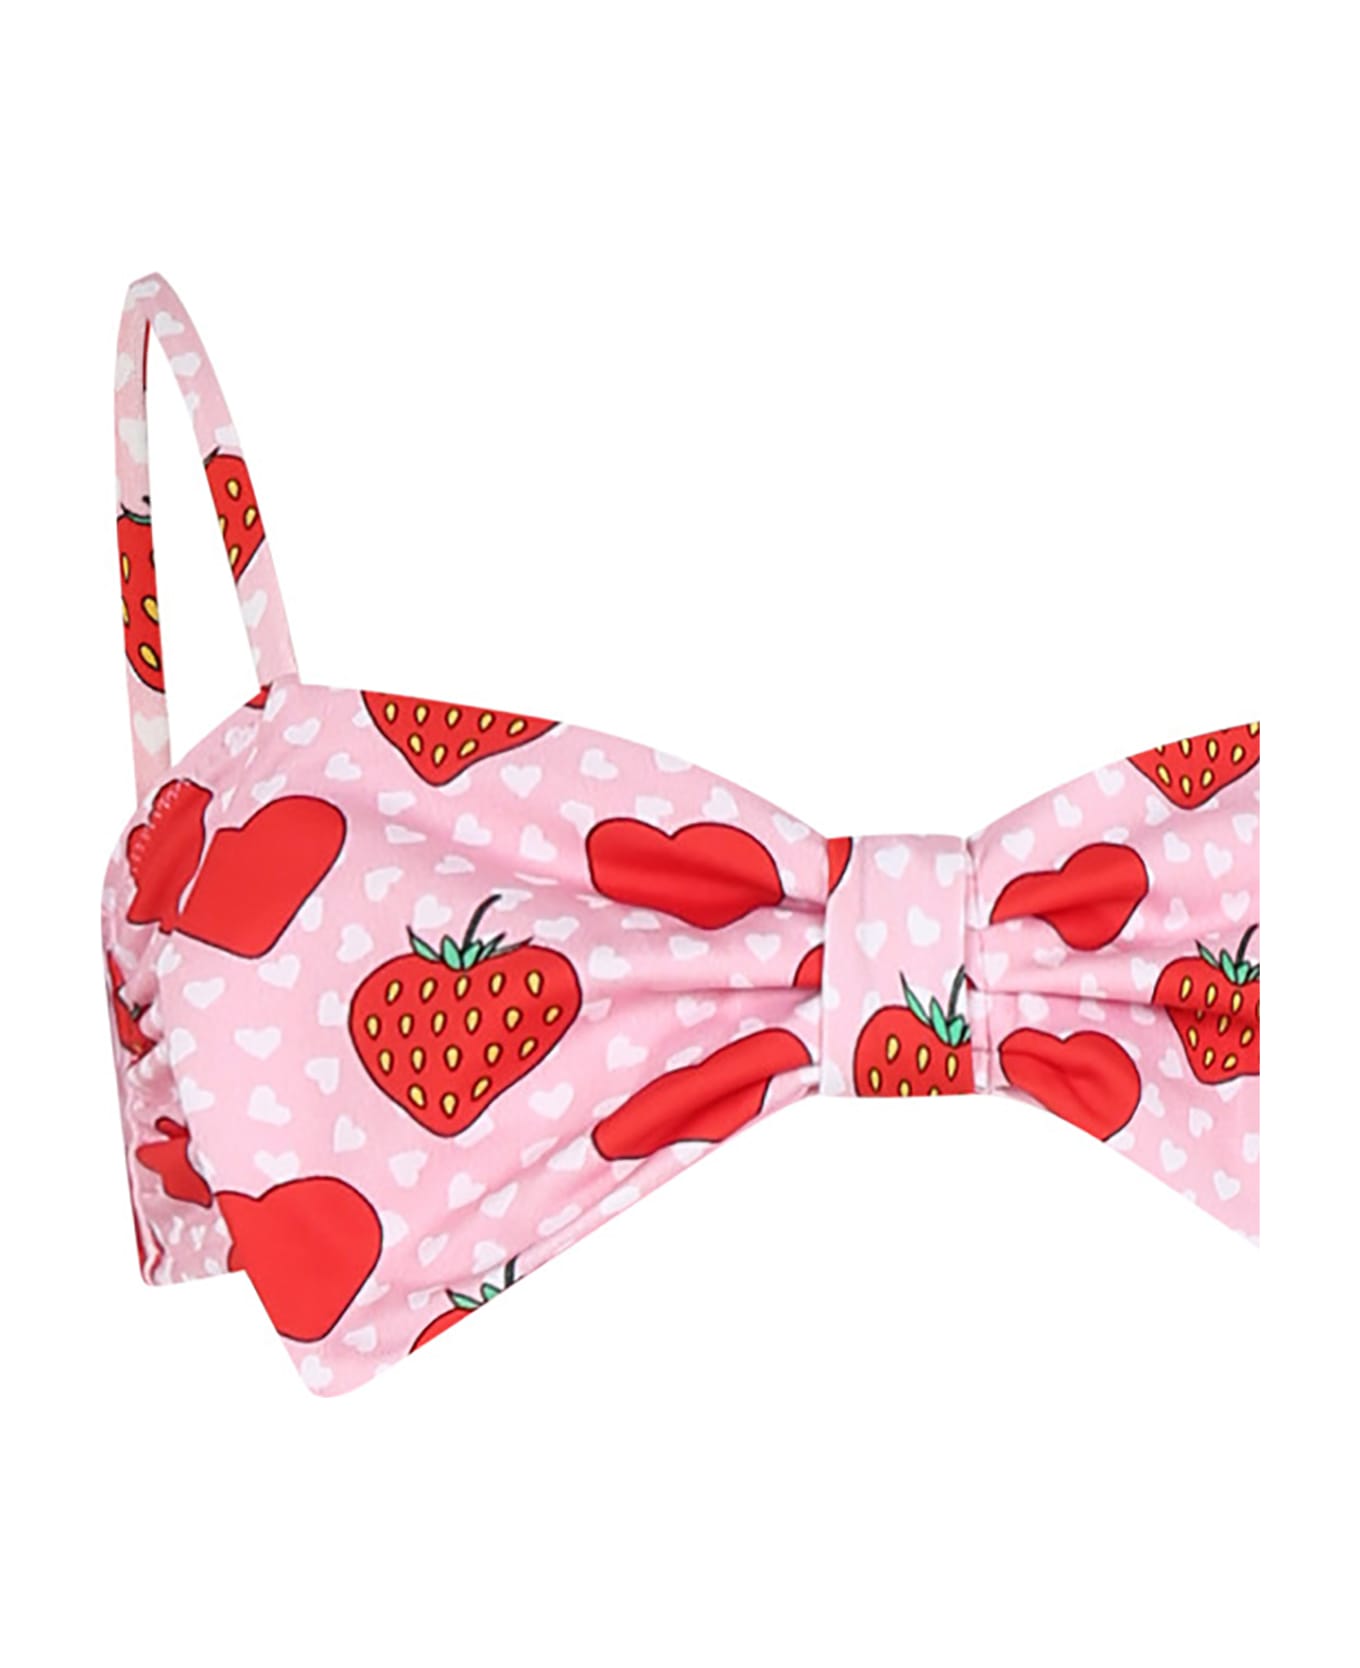 MC2 Saint Barth Pink Bikini For Girl With Strawberries And Hearts - Pink